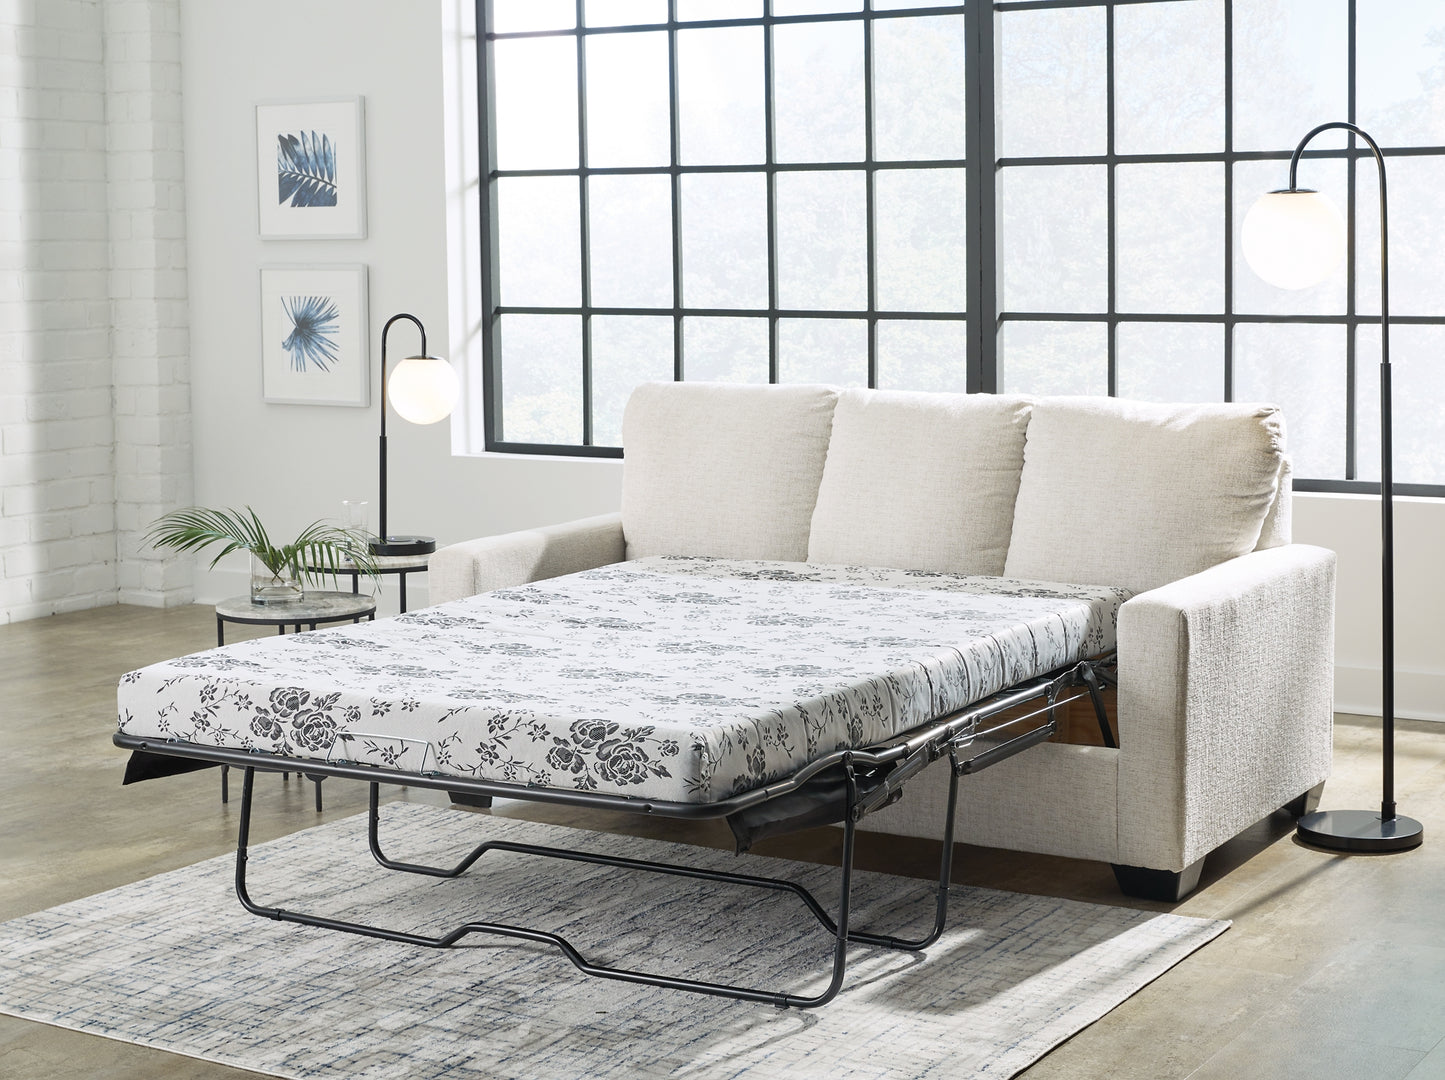 Rannis Full Sofa Sleeper Signature Design by Ashley®